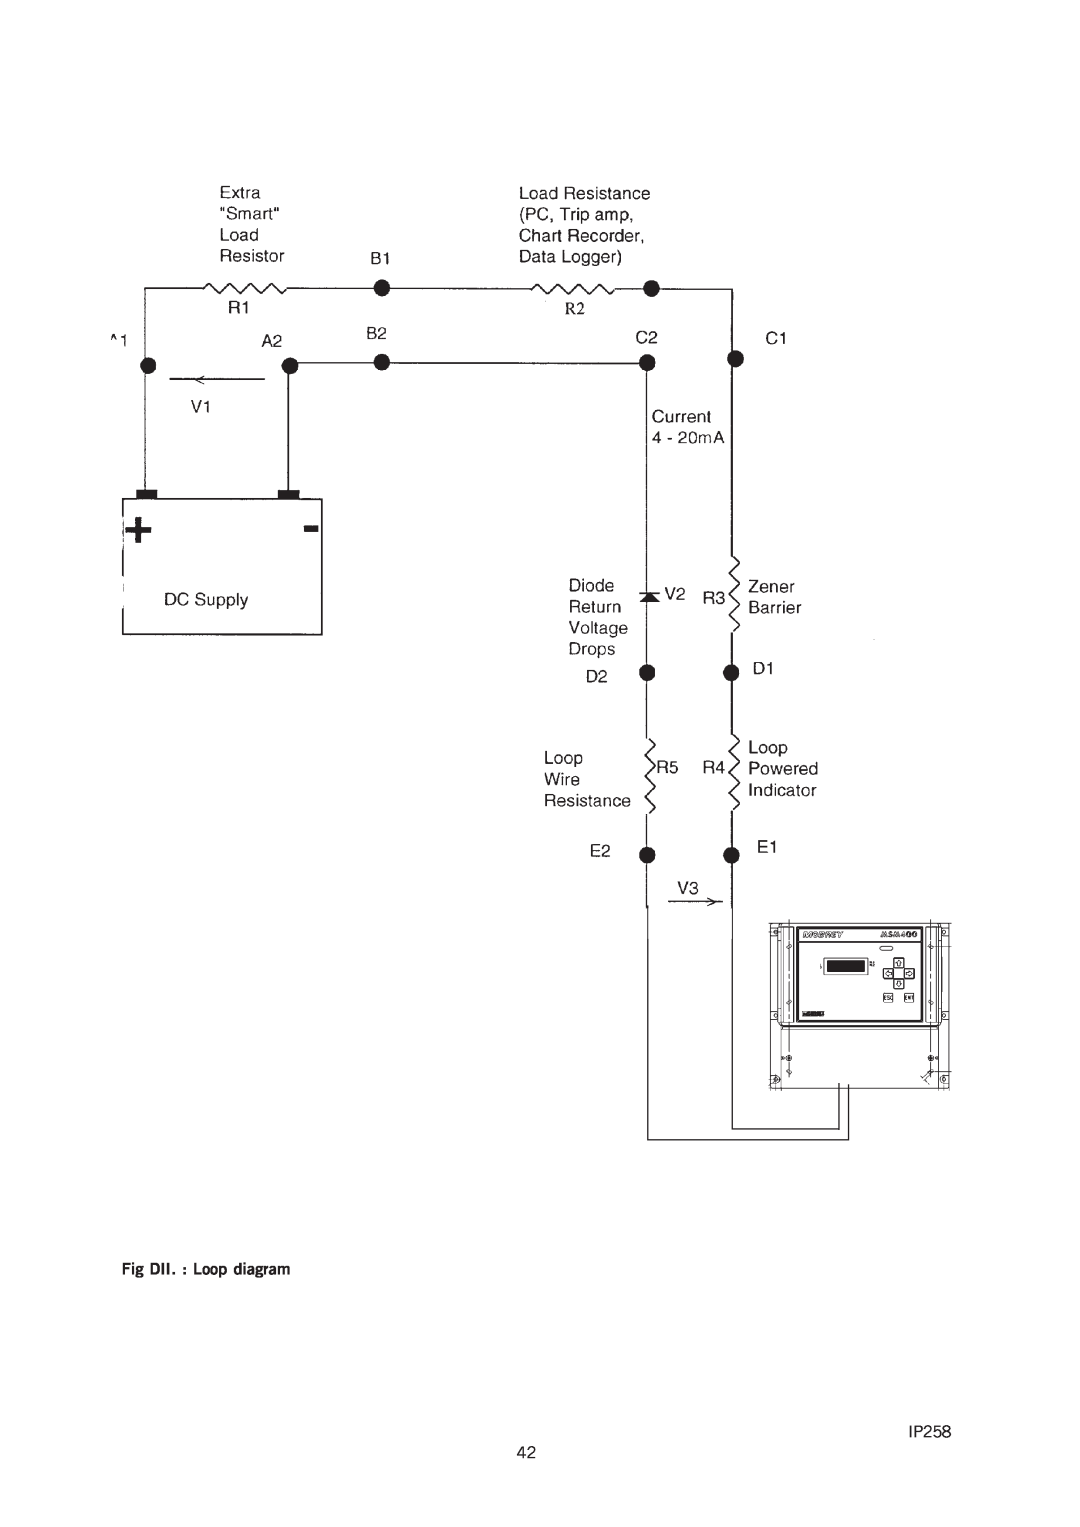 Emerson IP258 manual Fig DII. Loop diagram 